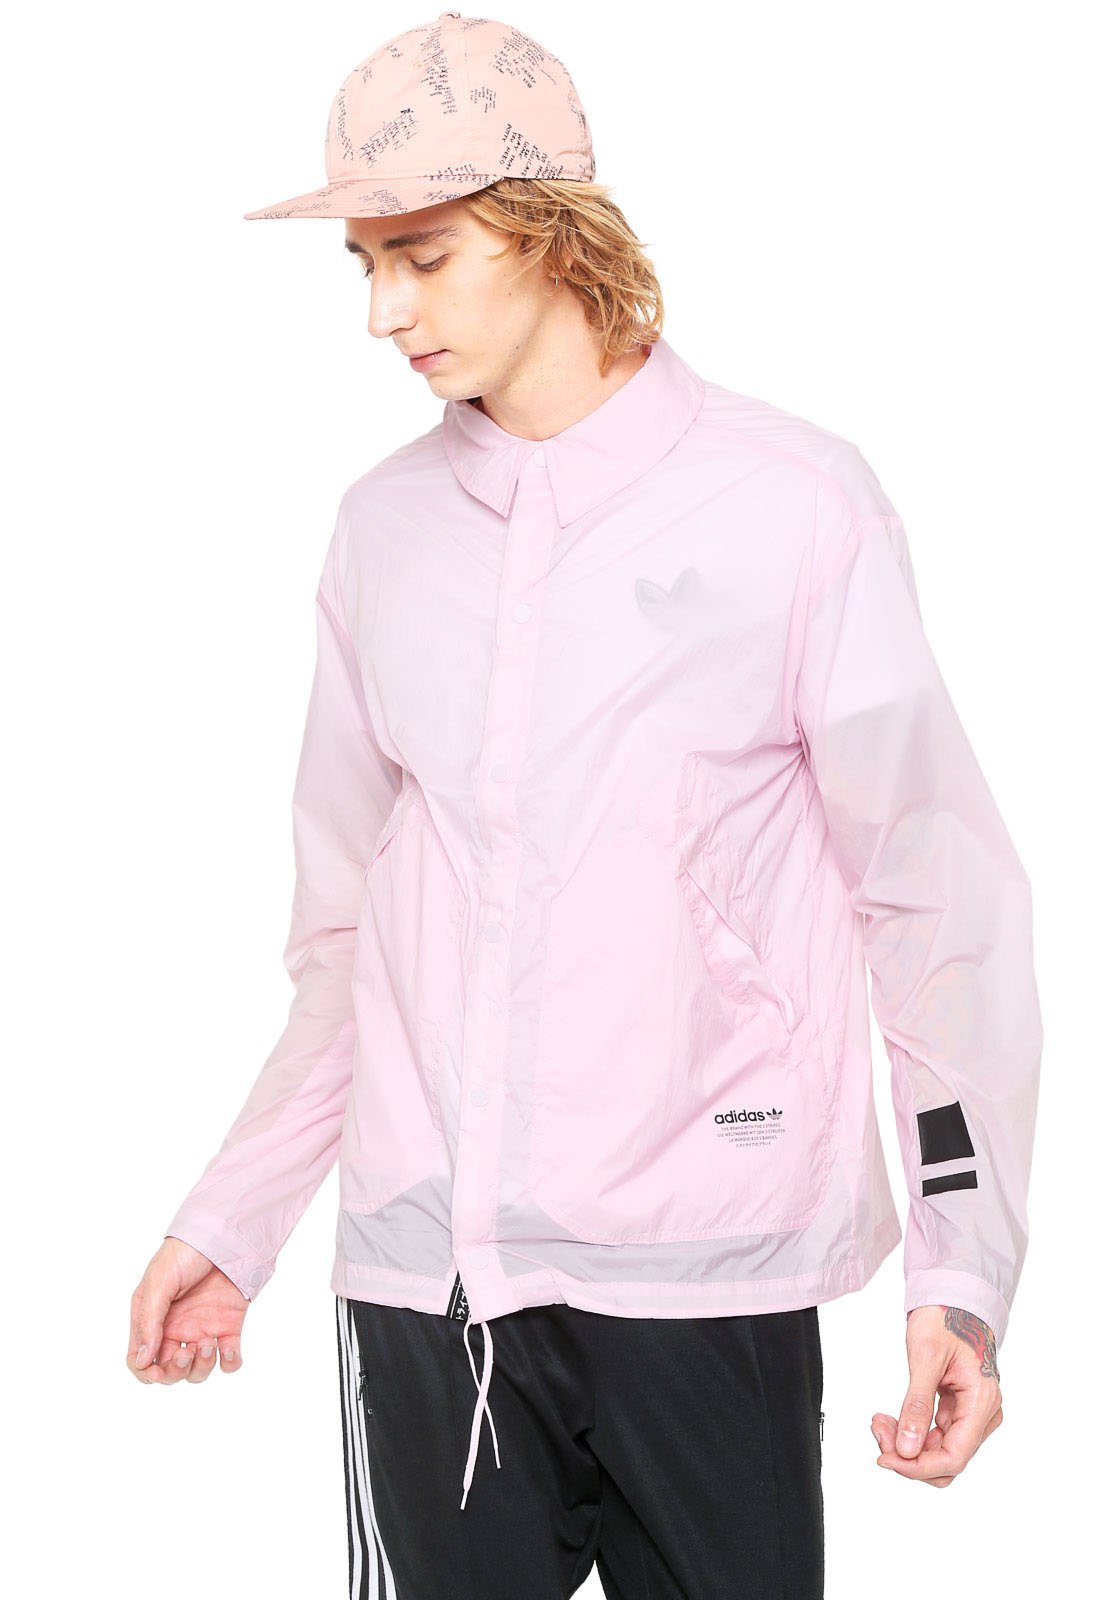 casaco rosa adidas masculino